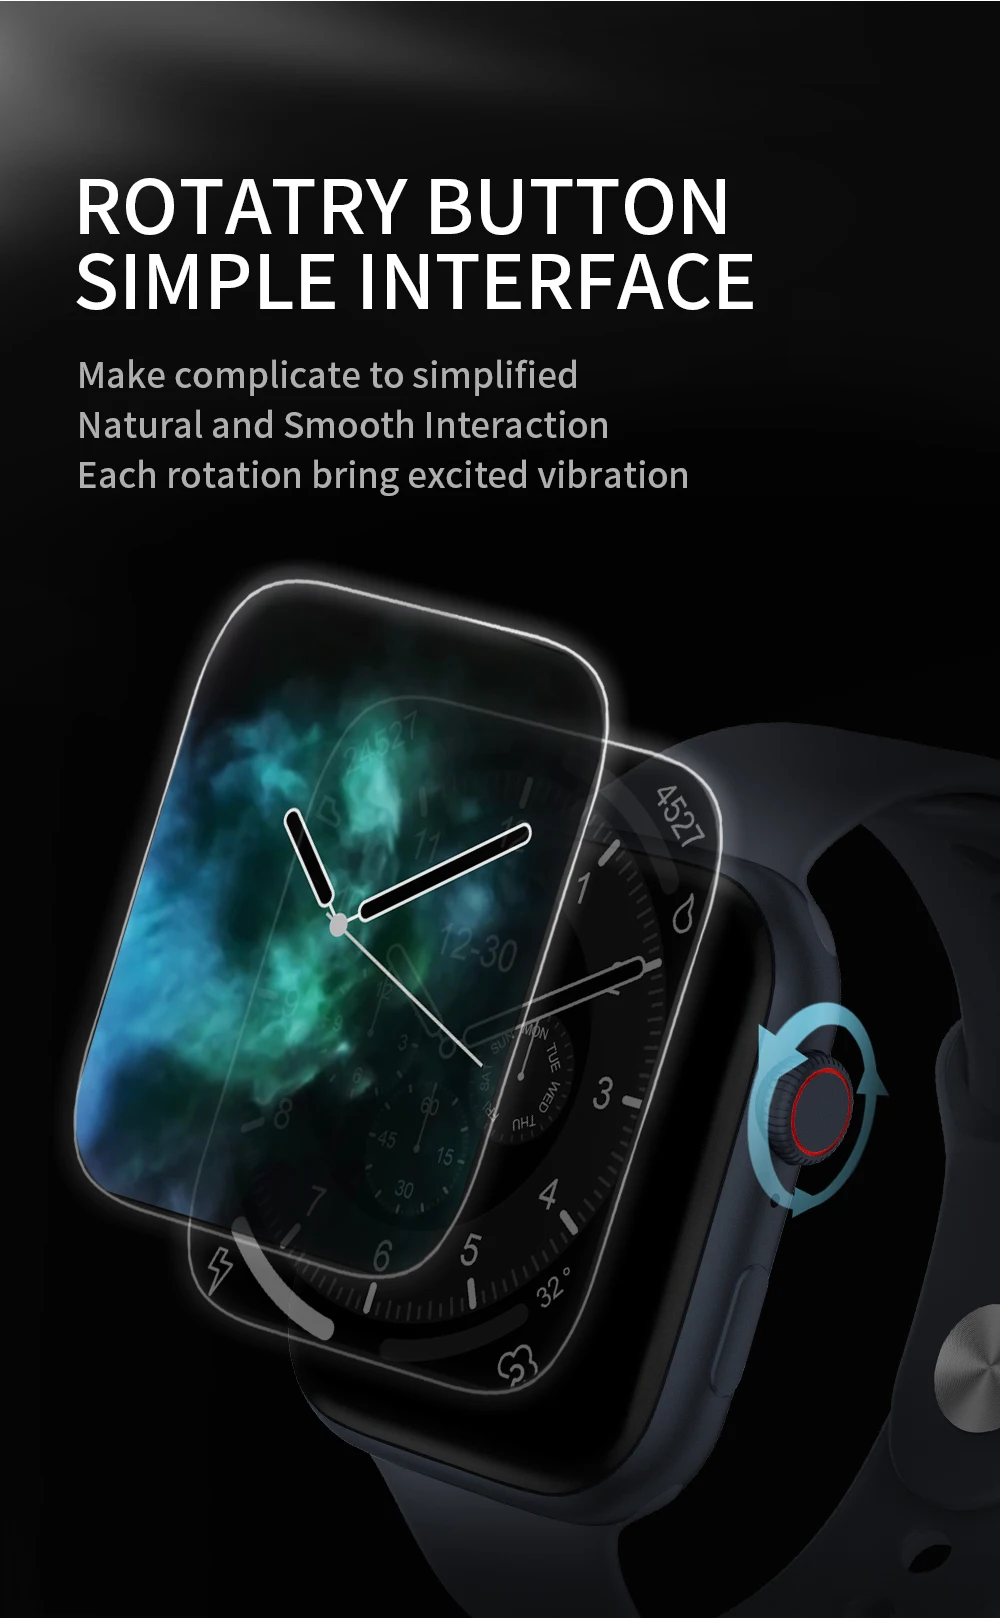 2022 Smartwatch I Watch 7 D7 PRO Reloj Inteligente D7PROMAX Iwo Series 7 Smart Watch D7PRO MAX